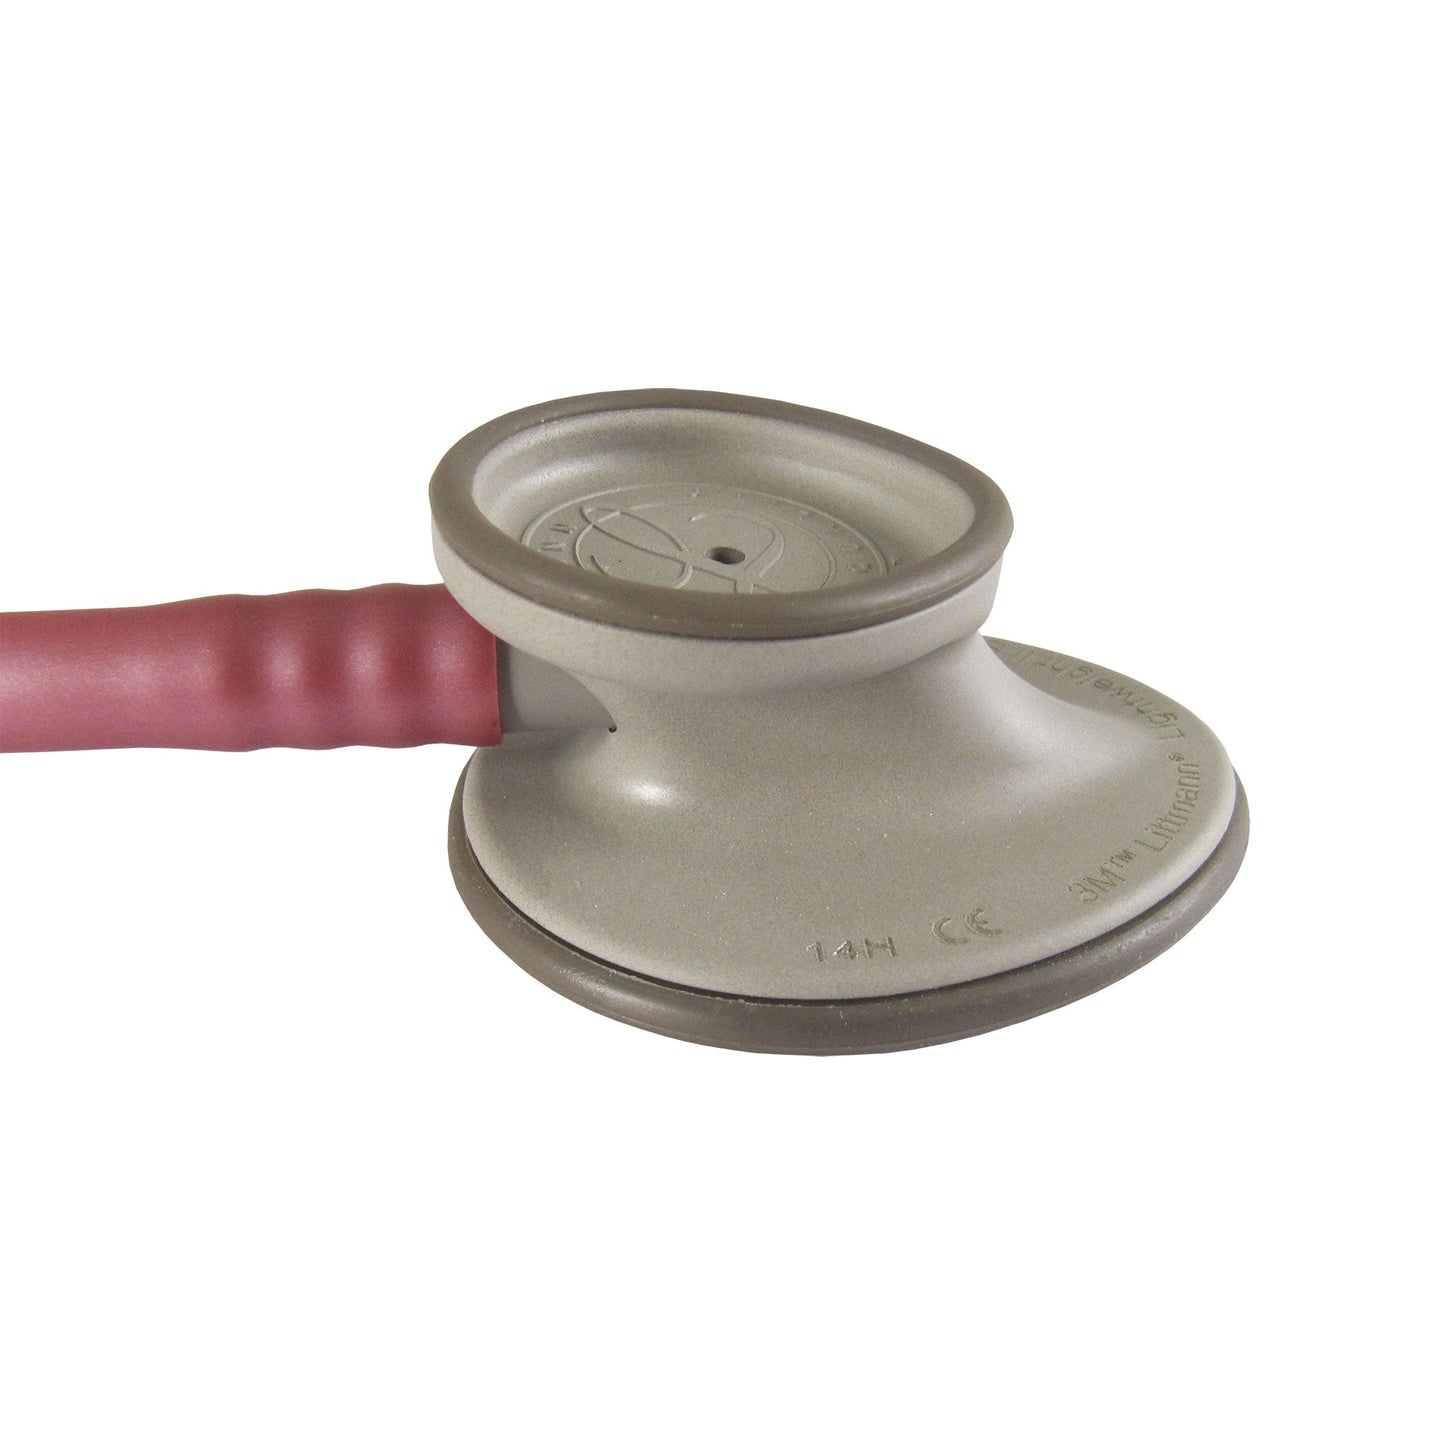 Littmann Lightweight II SE Nurses Stethoscope: Bubblegum Pink 2456